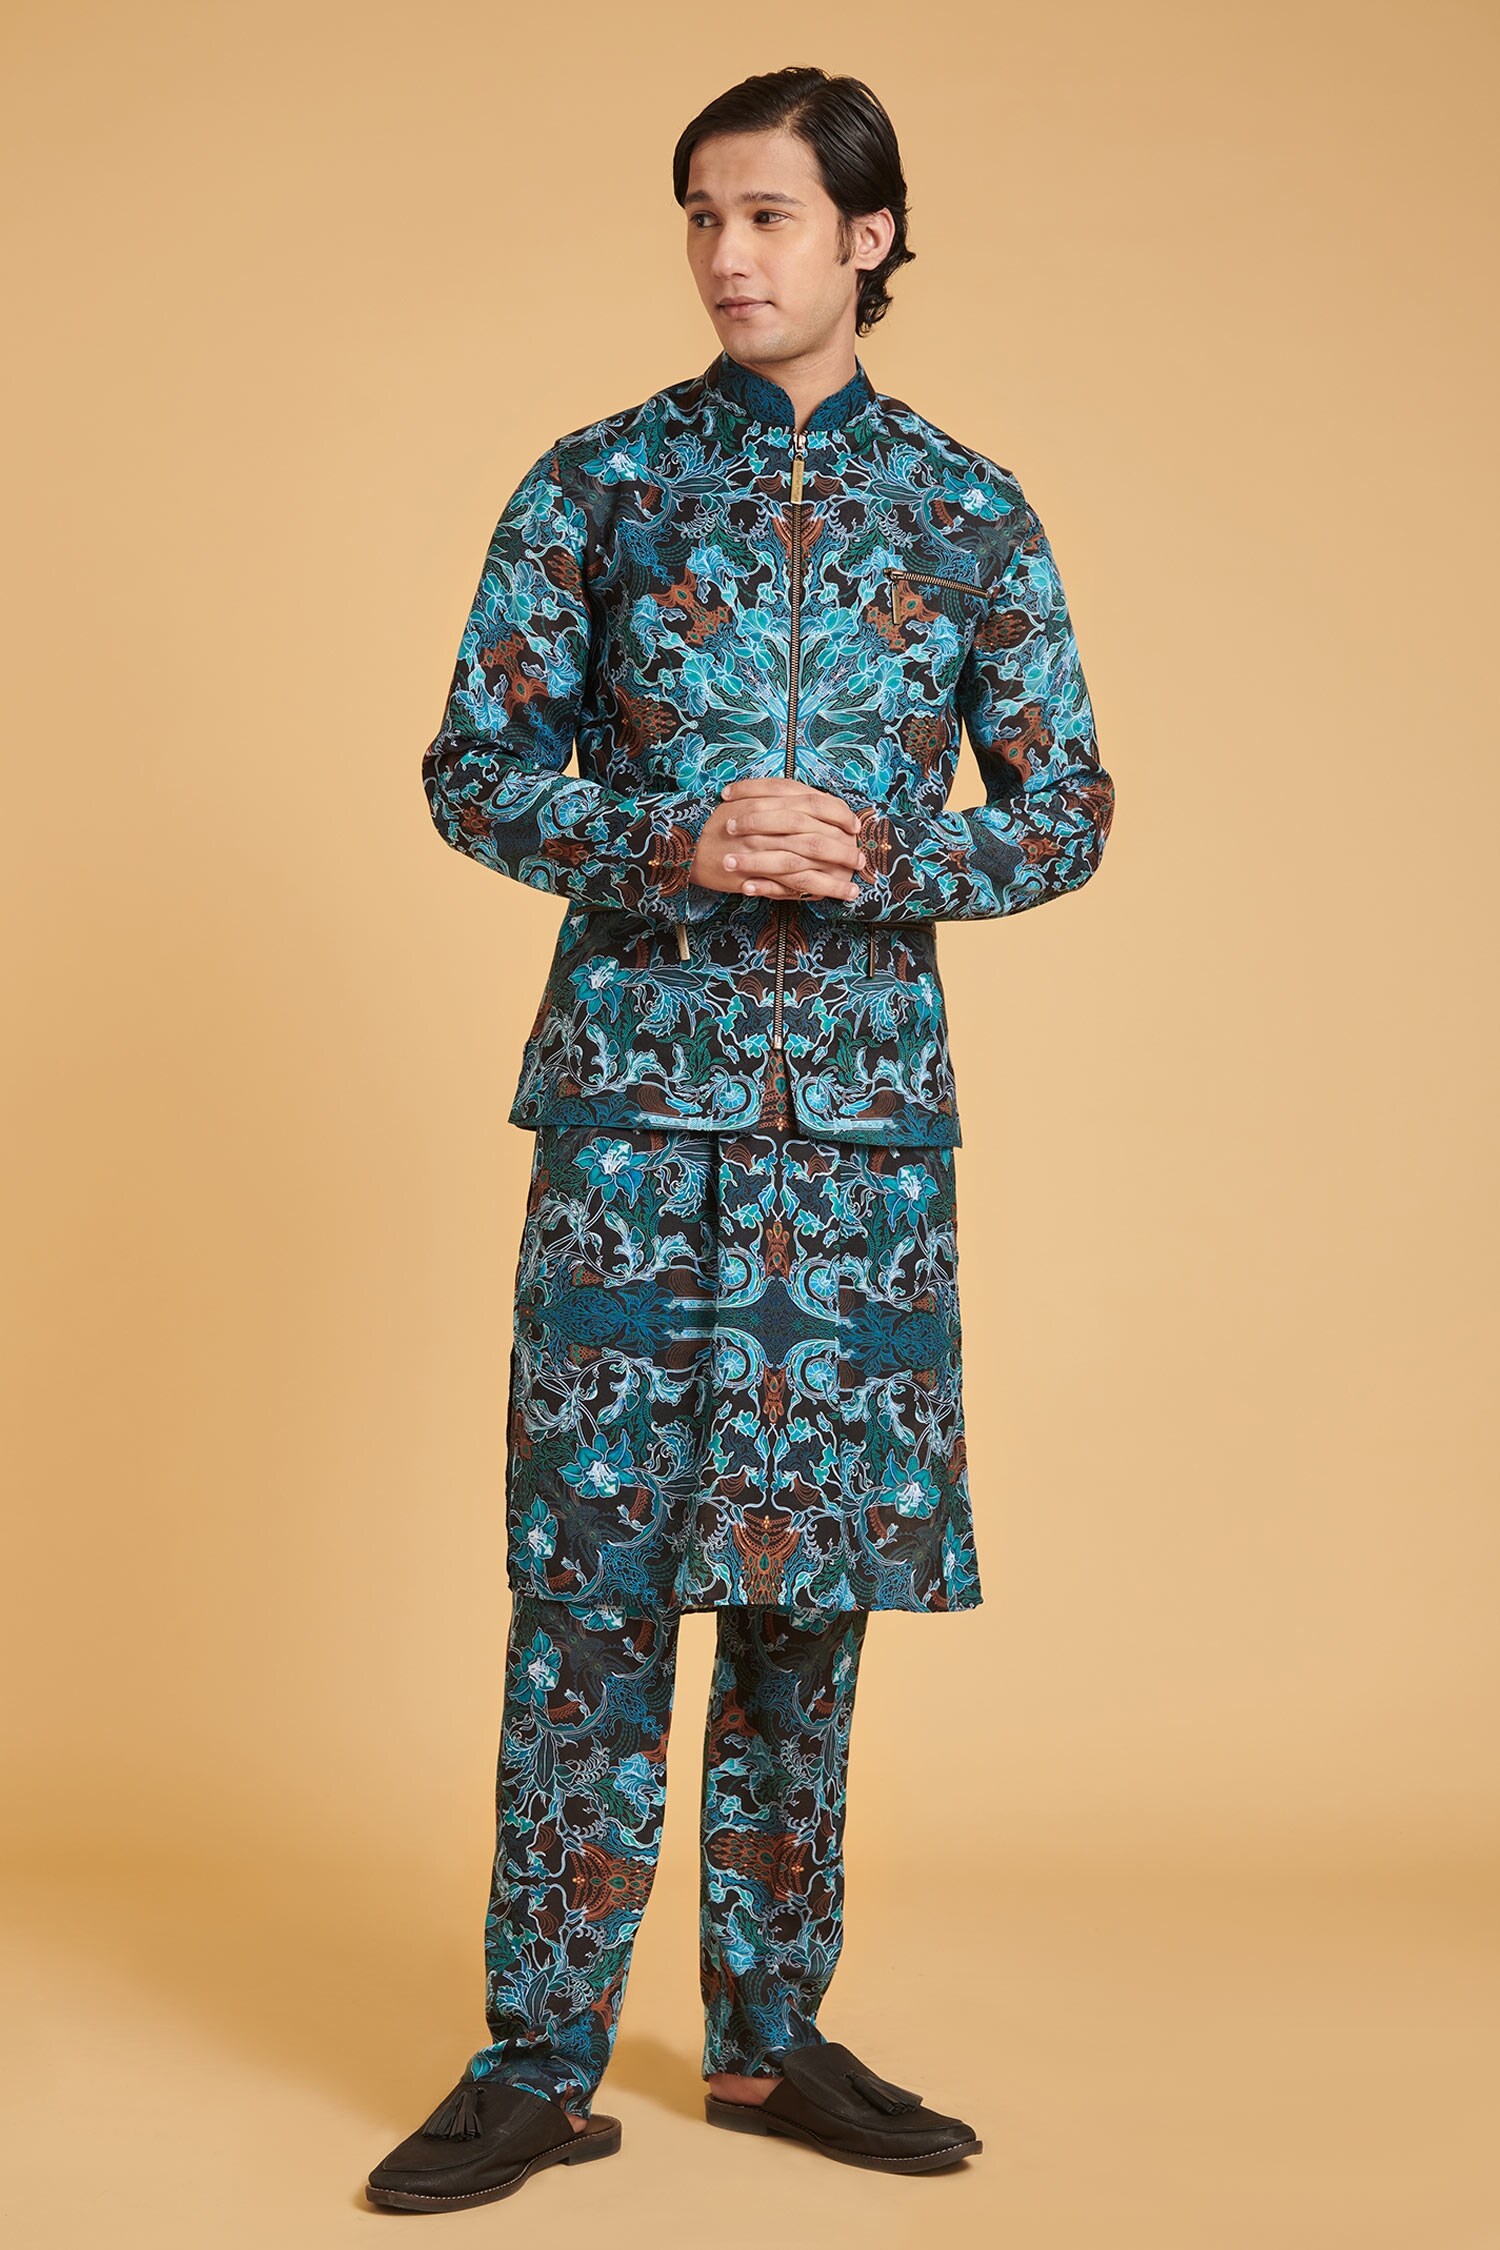 Siddartha Tytler Black Blended Linen Jewel Print Waistcoat And Kurta Set